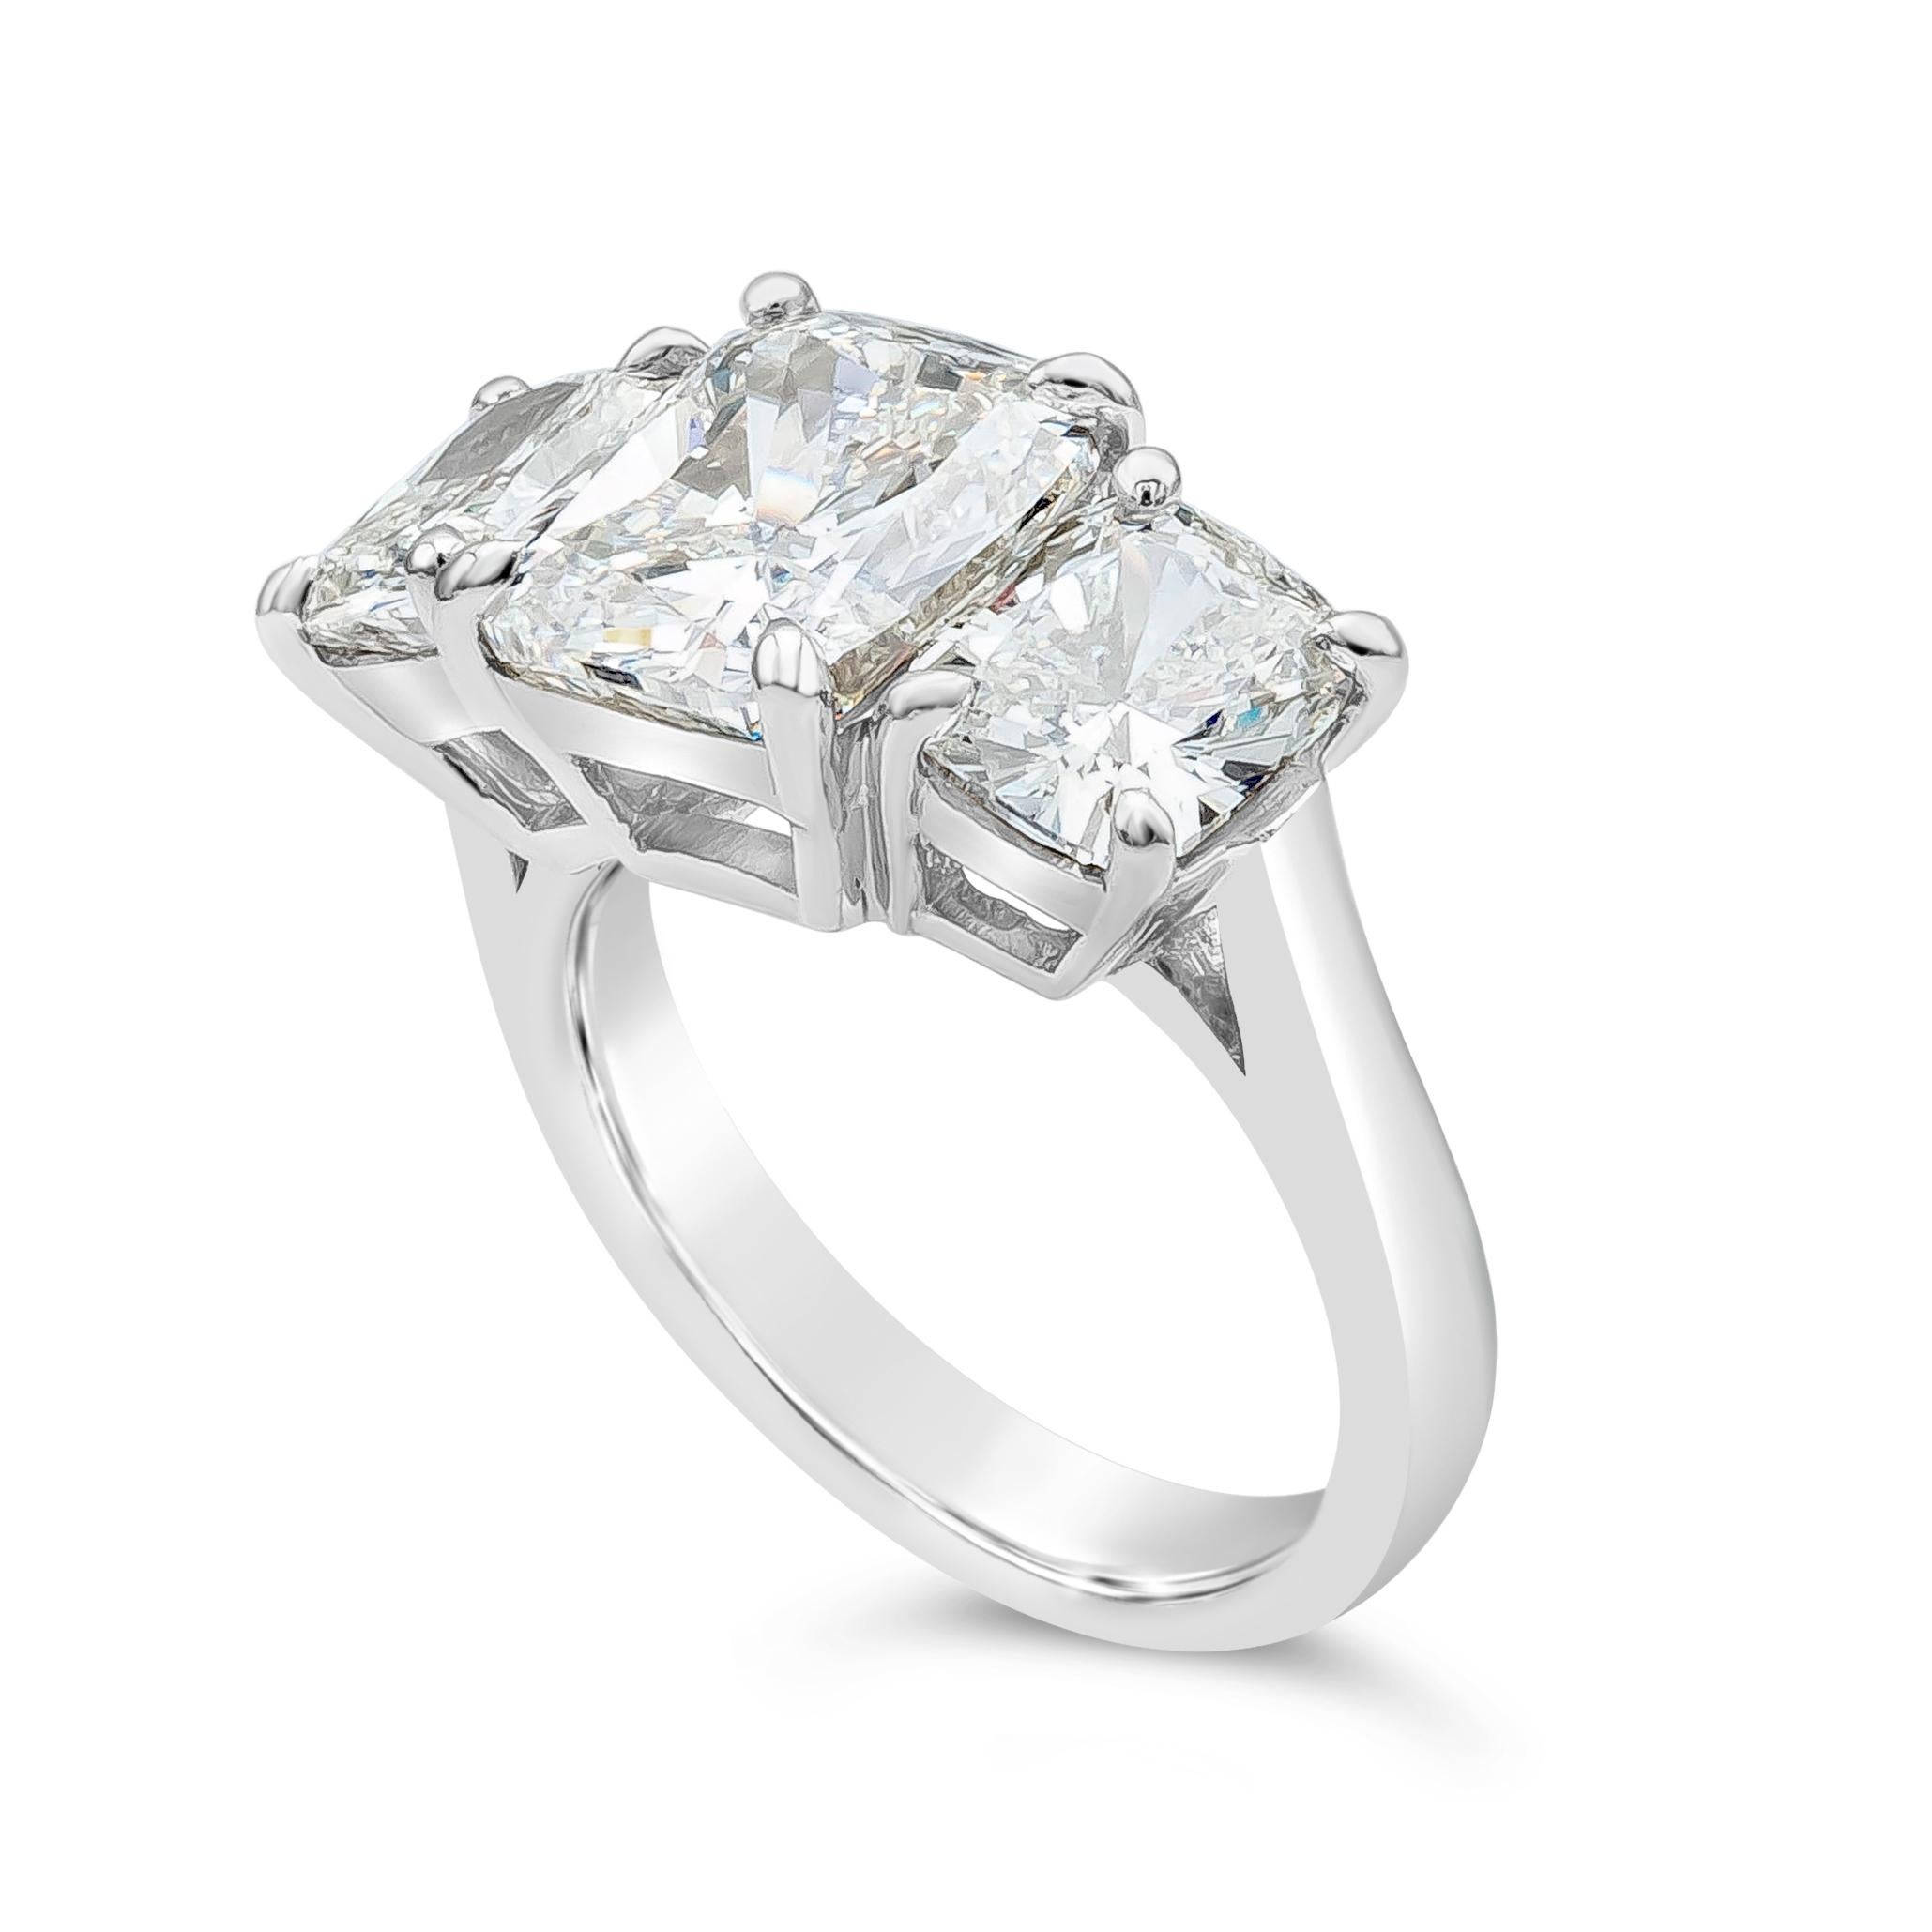 Contemporary Cushion Cut Diamond Three Stone Engagement Ring, 8.47 Carats Total